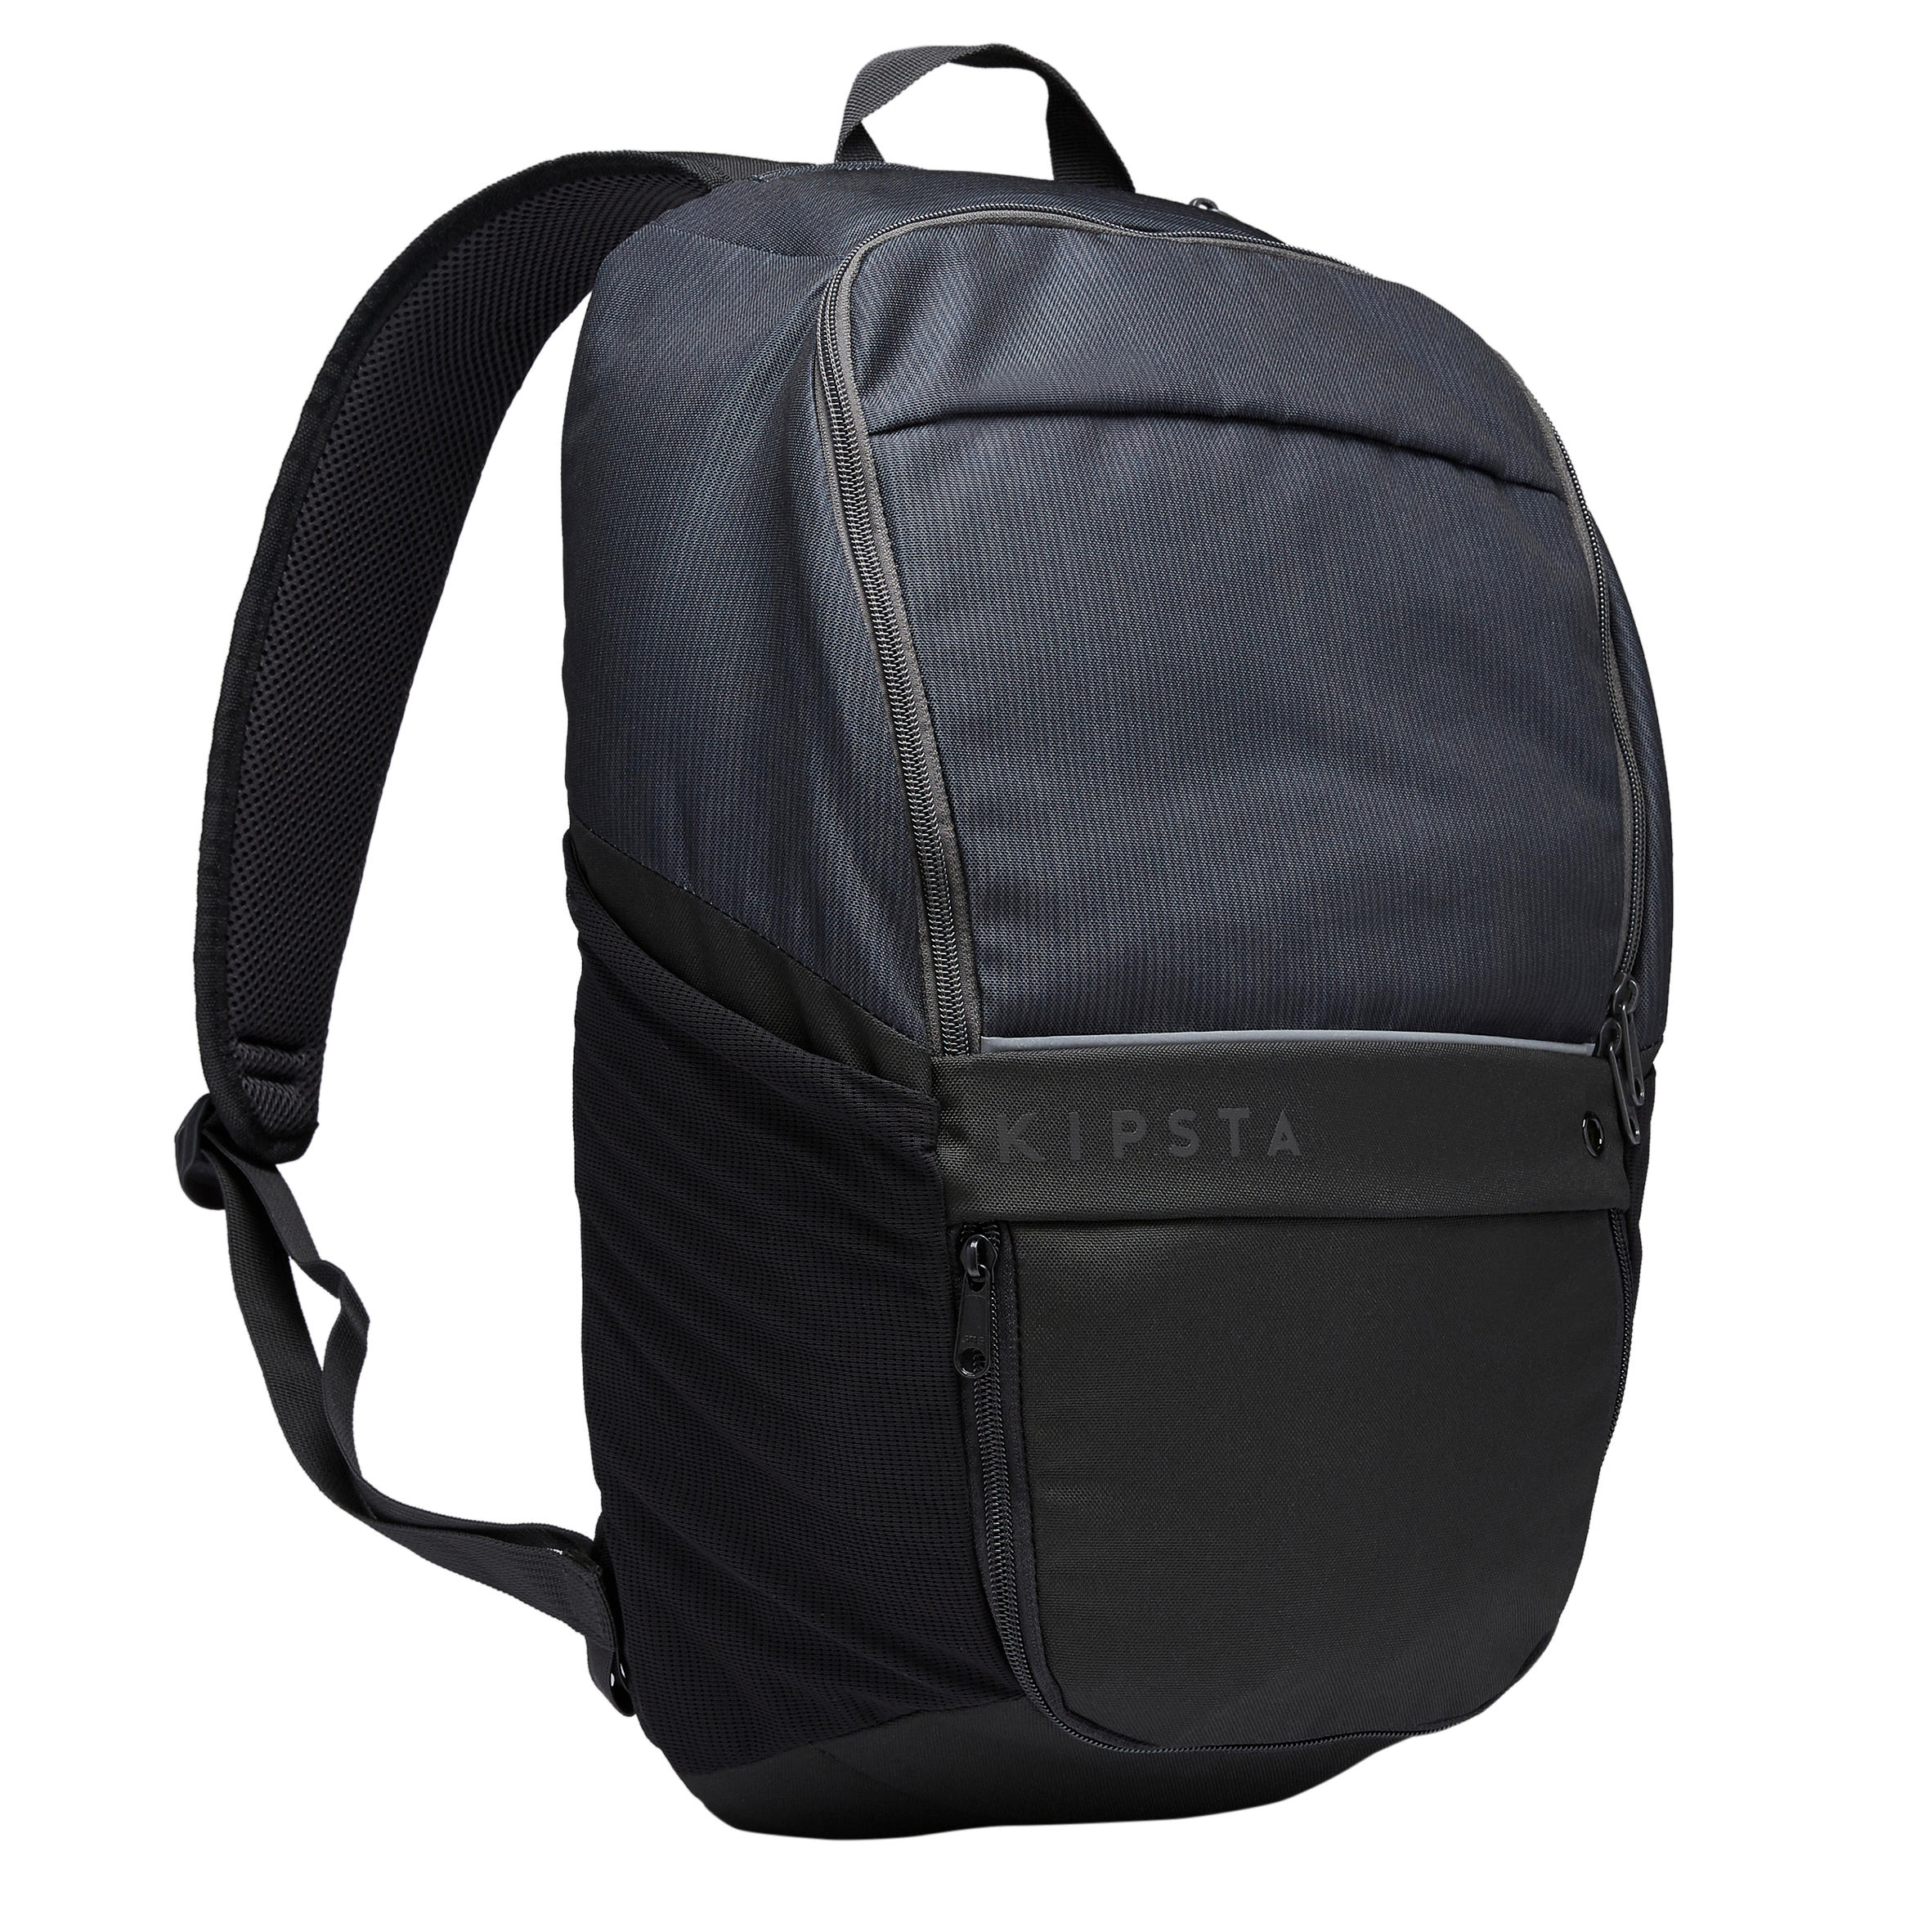 DECATHLON KIPSTA Kipsta Roller Bag Suitcase - 70L | Catch.com.au